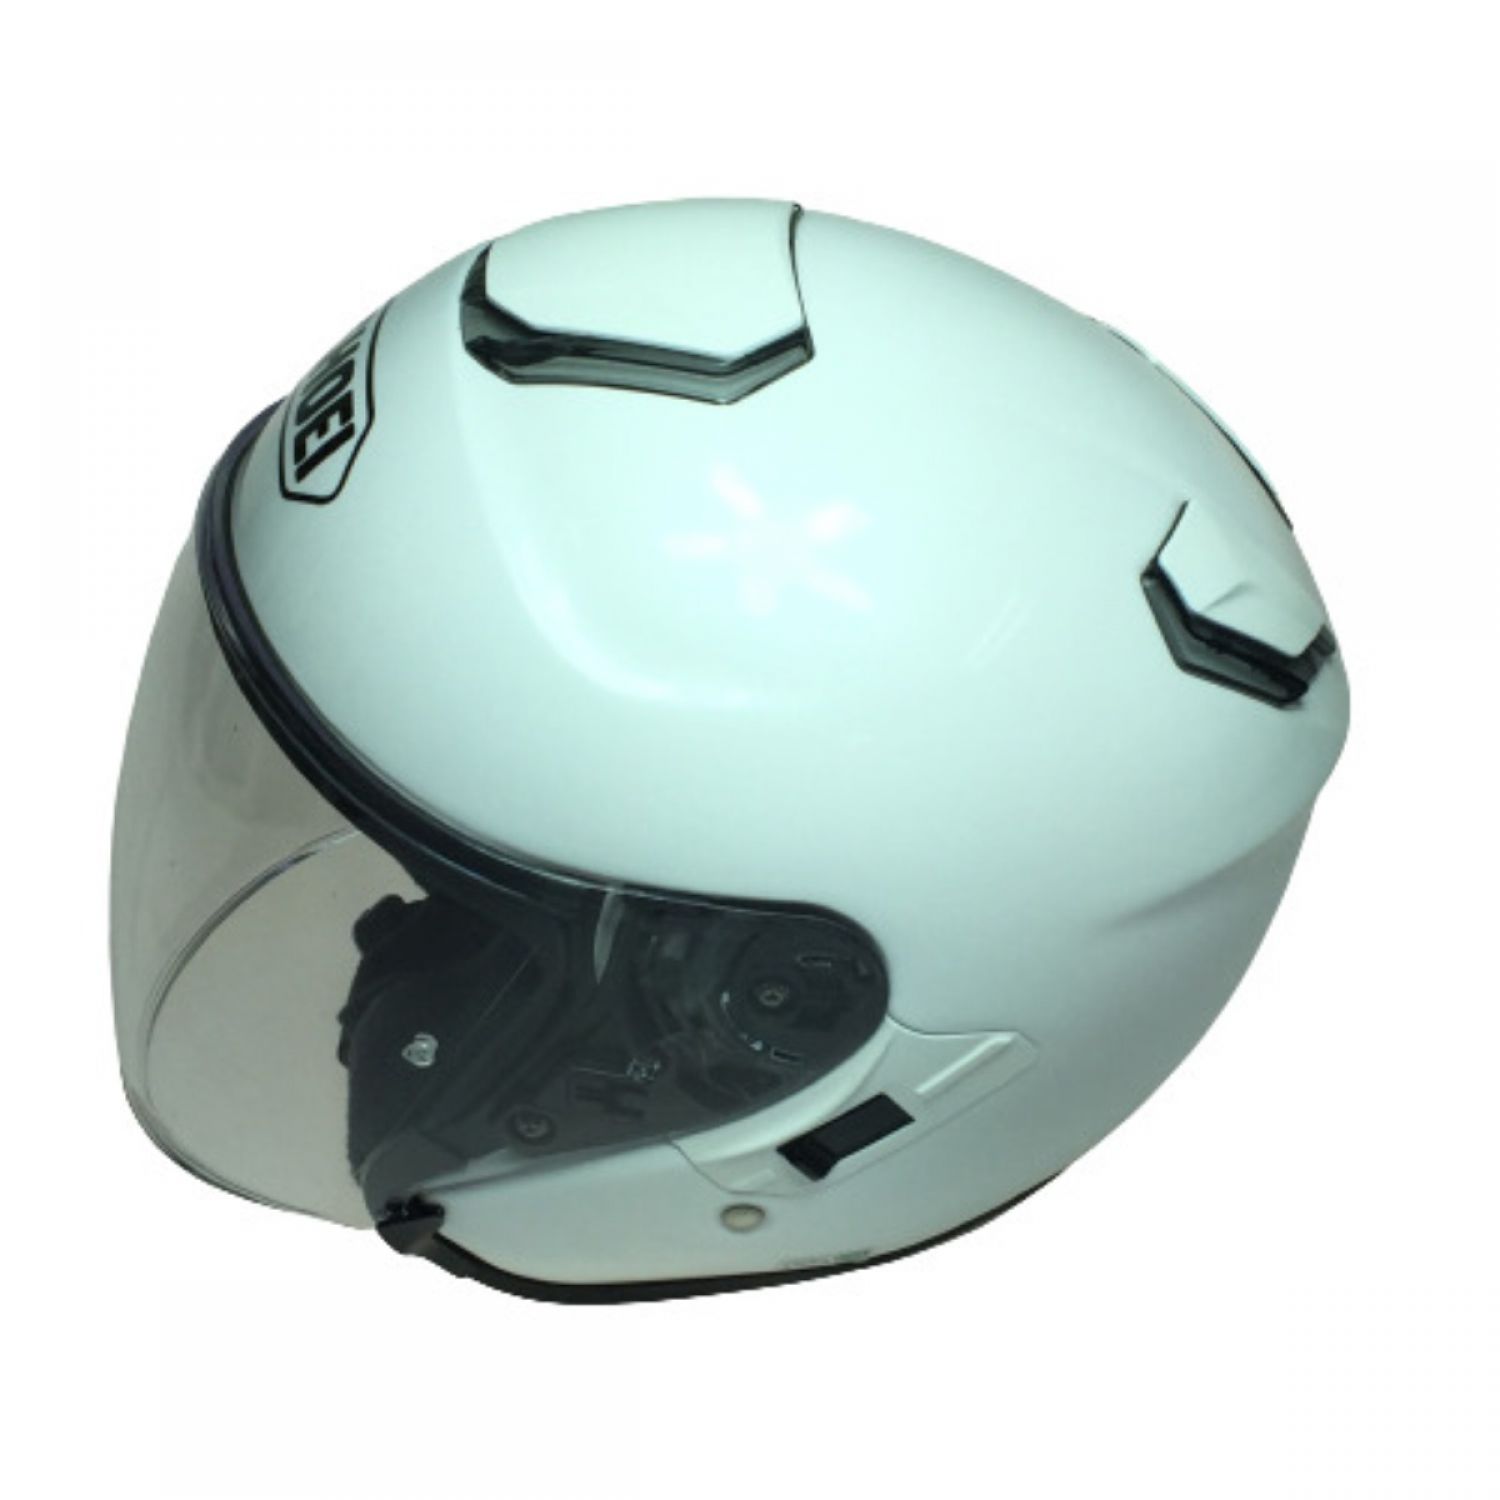 SHOEI ショウエイ J-CRUISEヘルメット Sサイズ